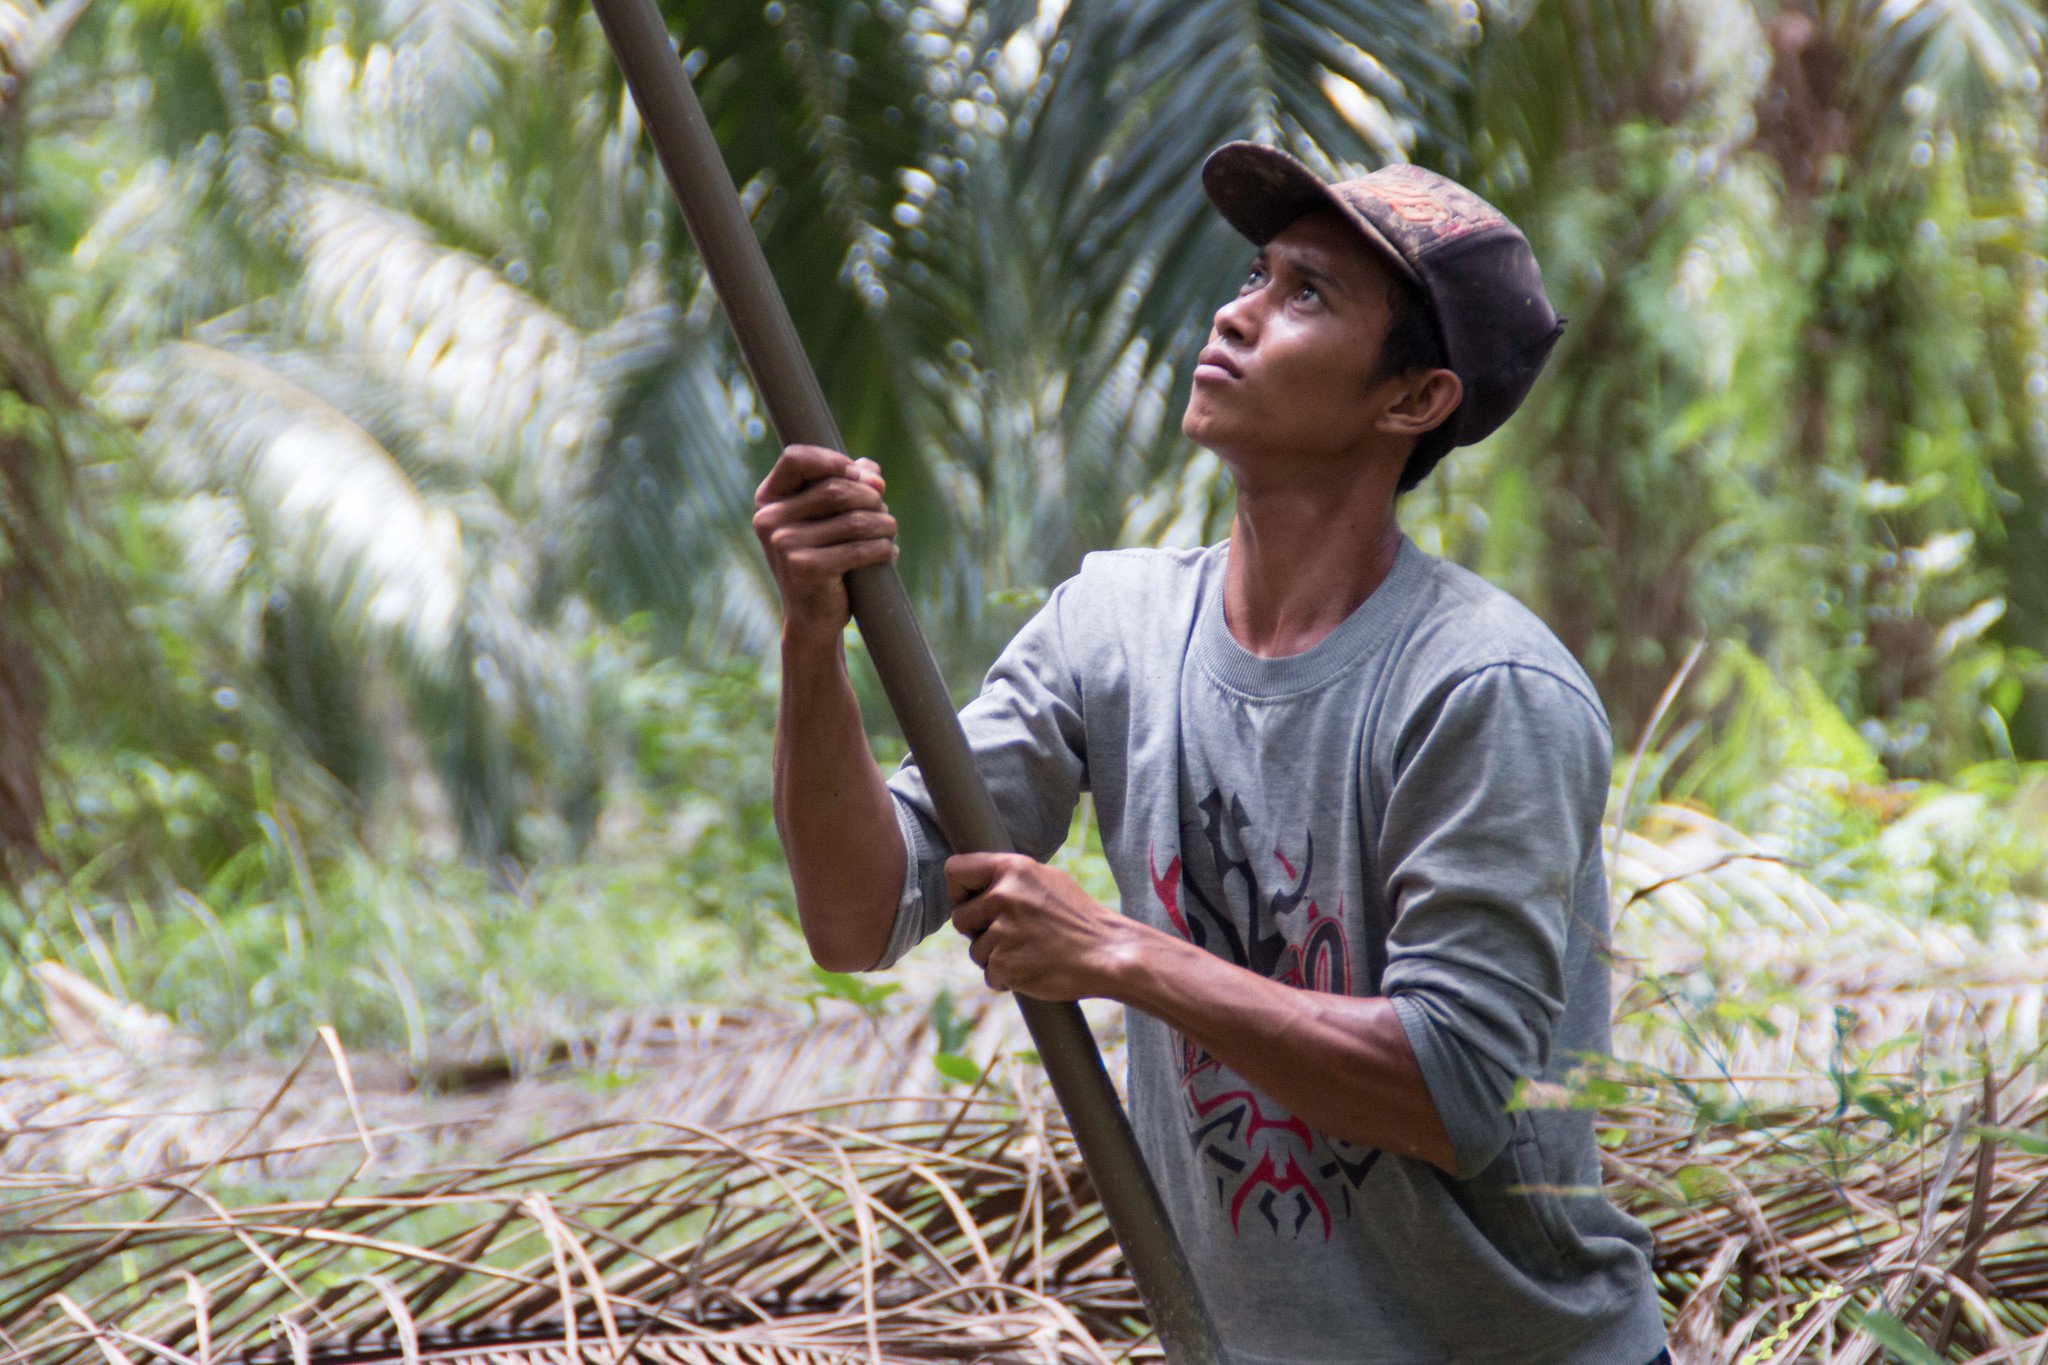 Palm oil harvesting